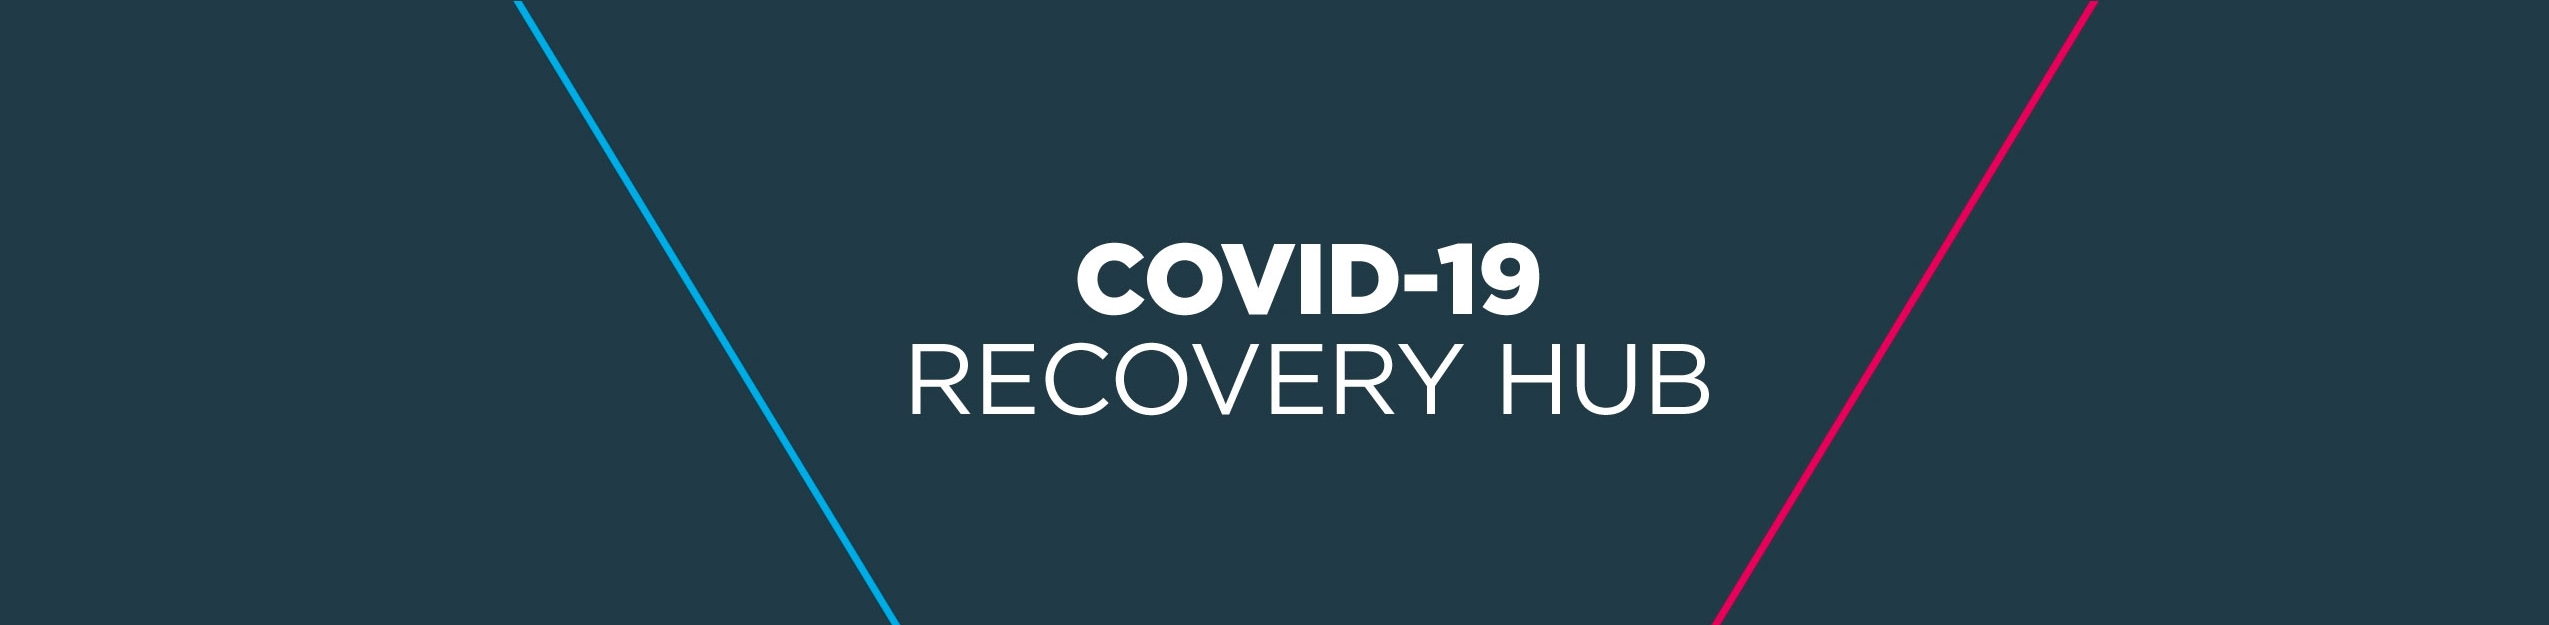 Covid 19 Recovery Hub